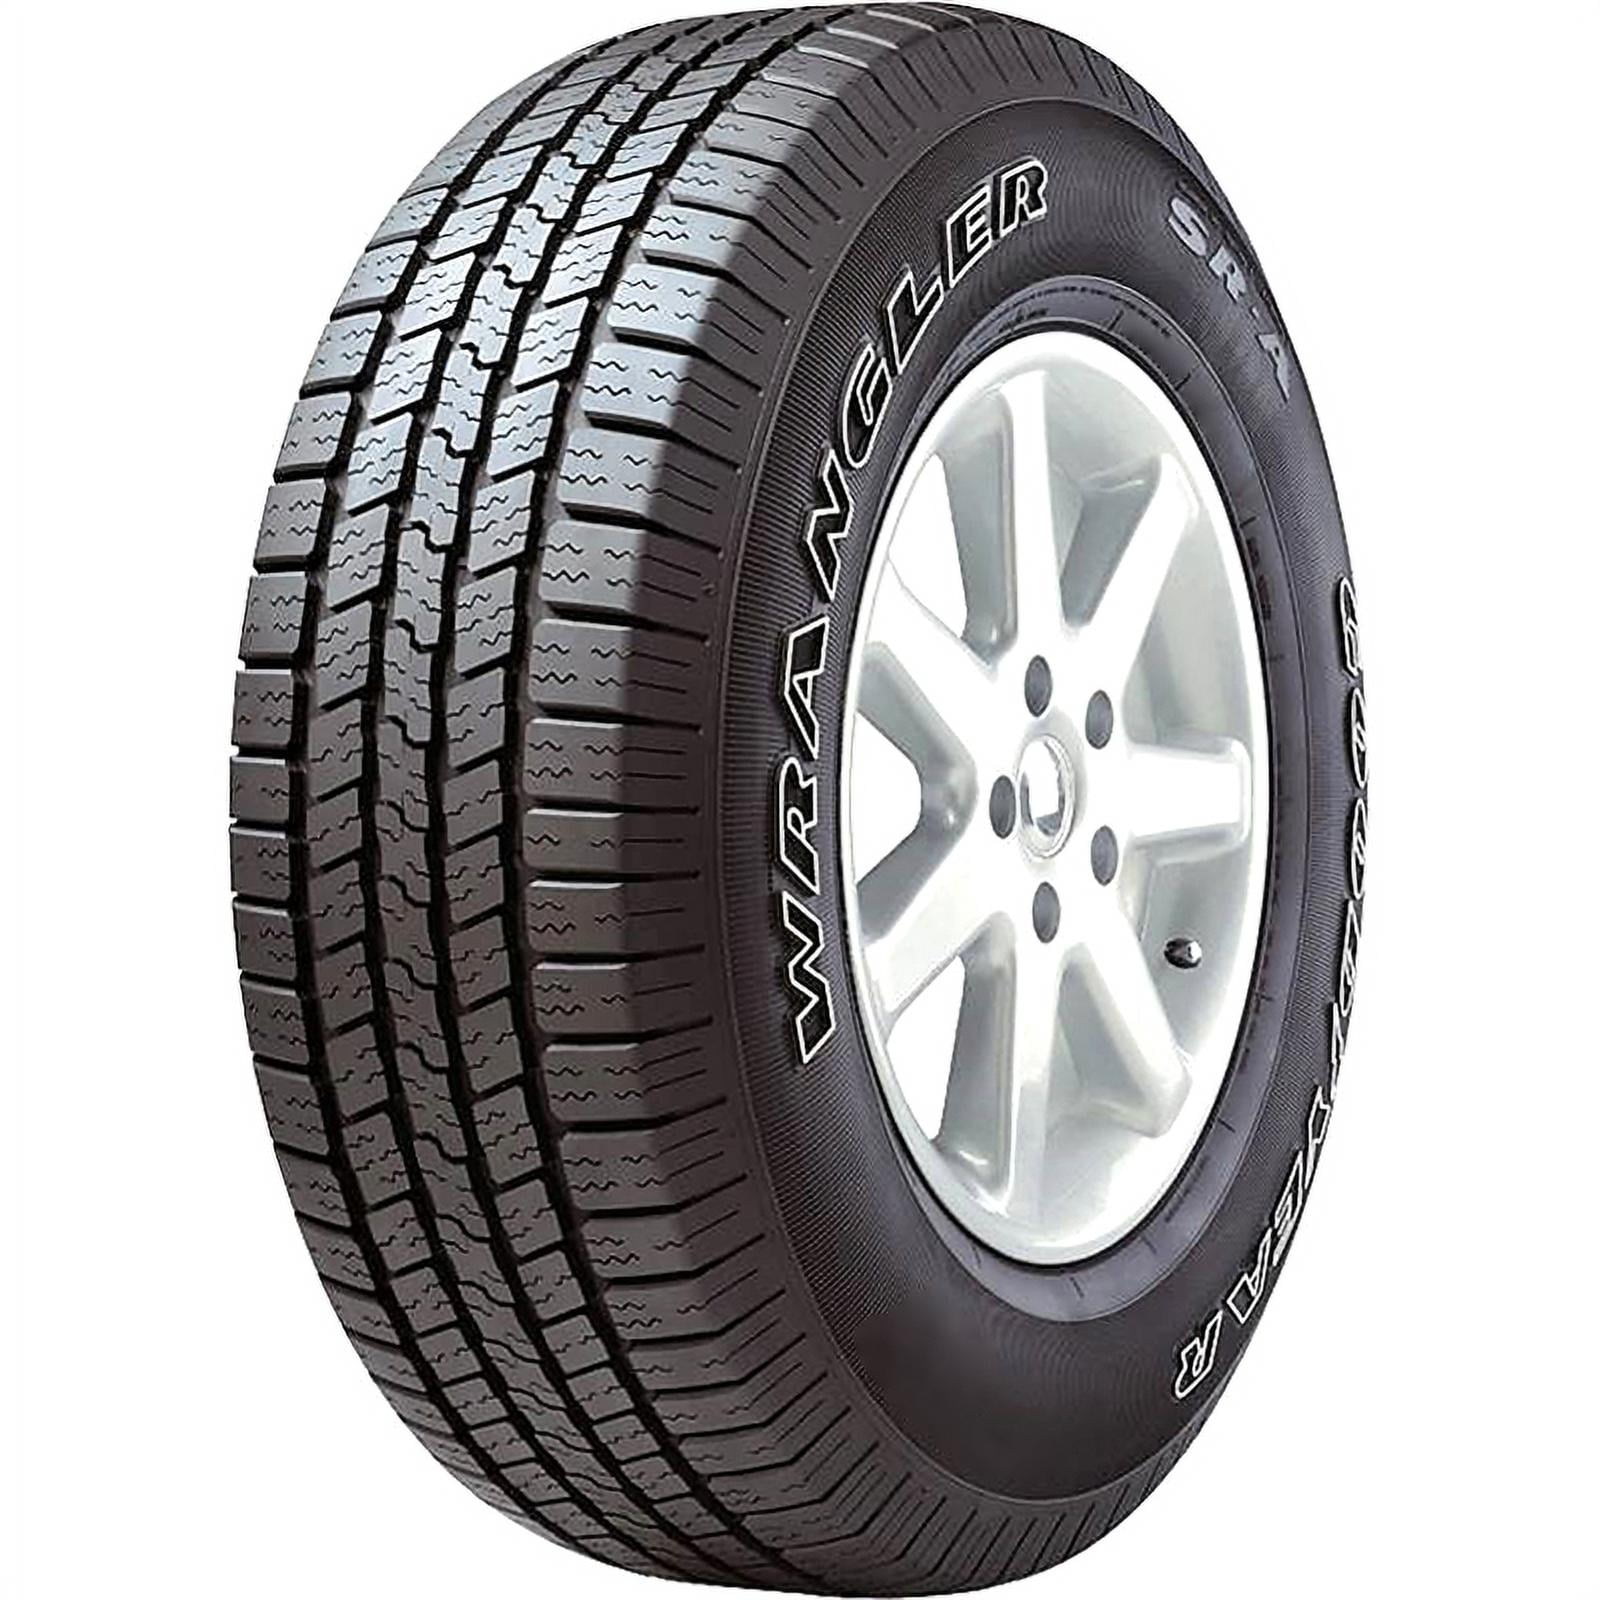 Goodyear Wrangler SR-A All-Season P215/75R15 100S Tire 